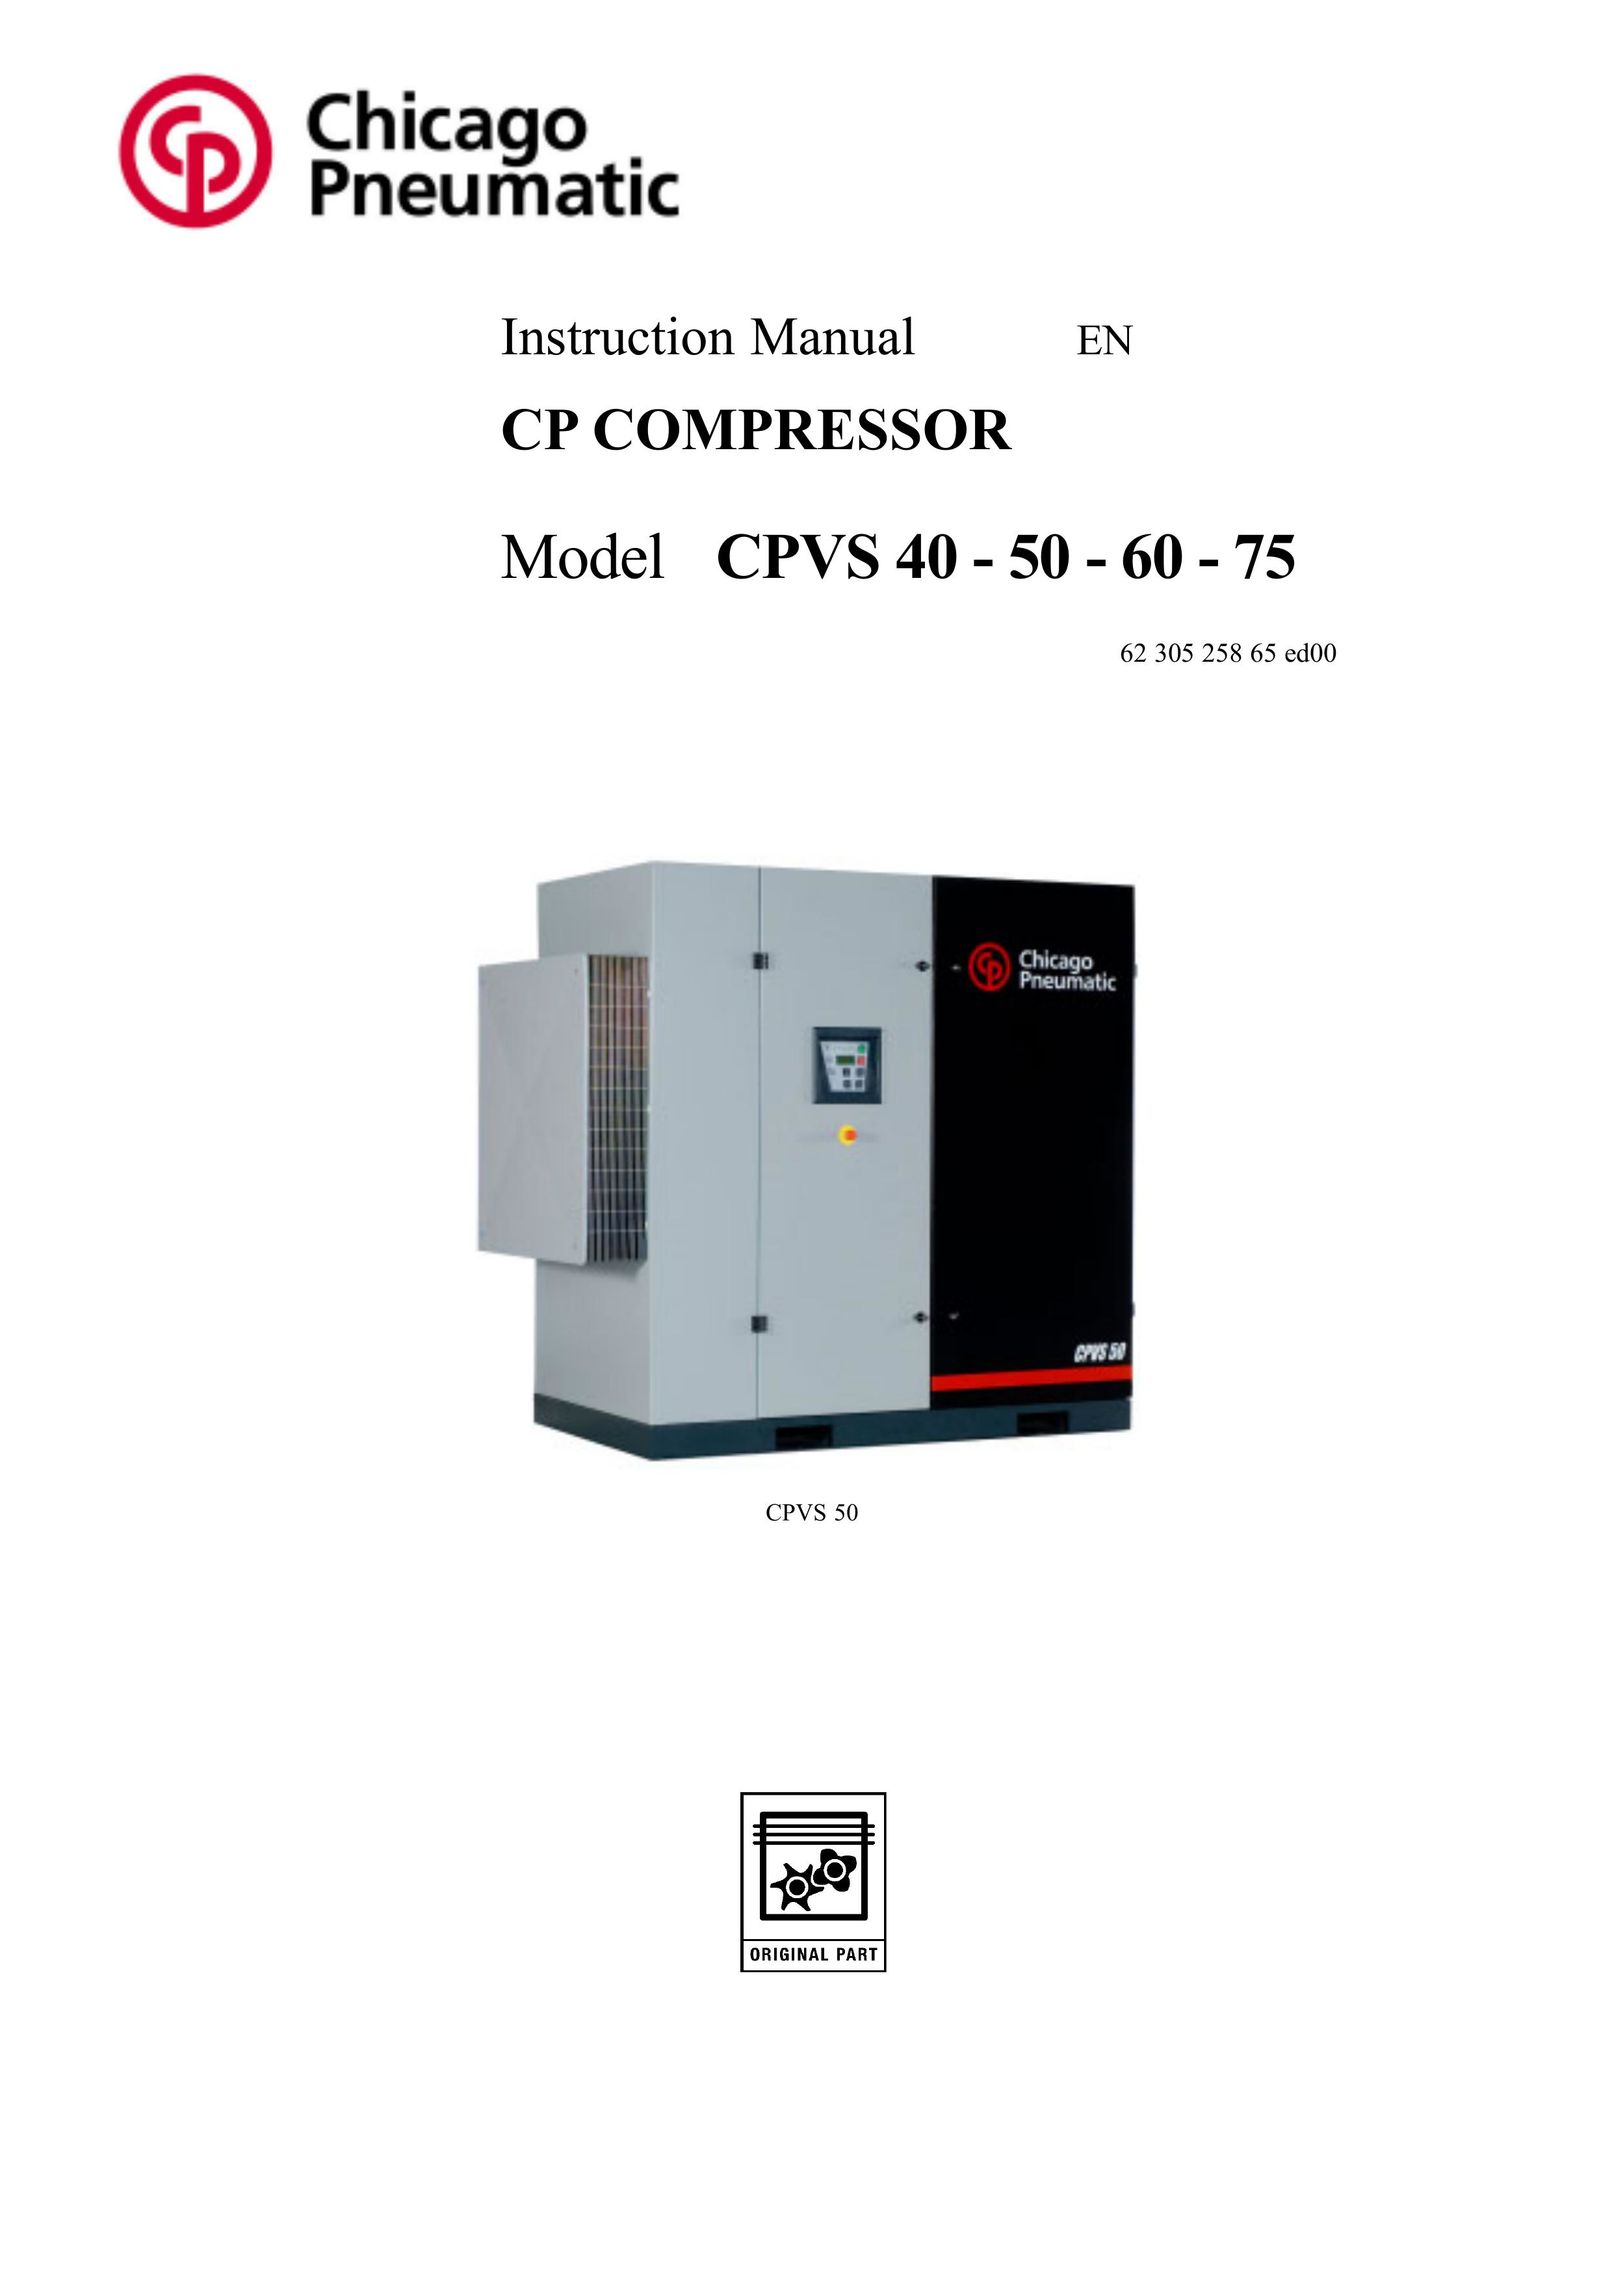 Chicago Pneumatic CPVS 75 Air Compressor User Manual